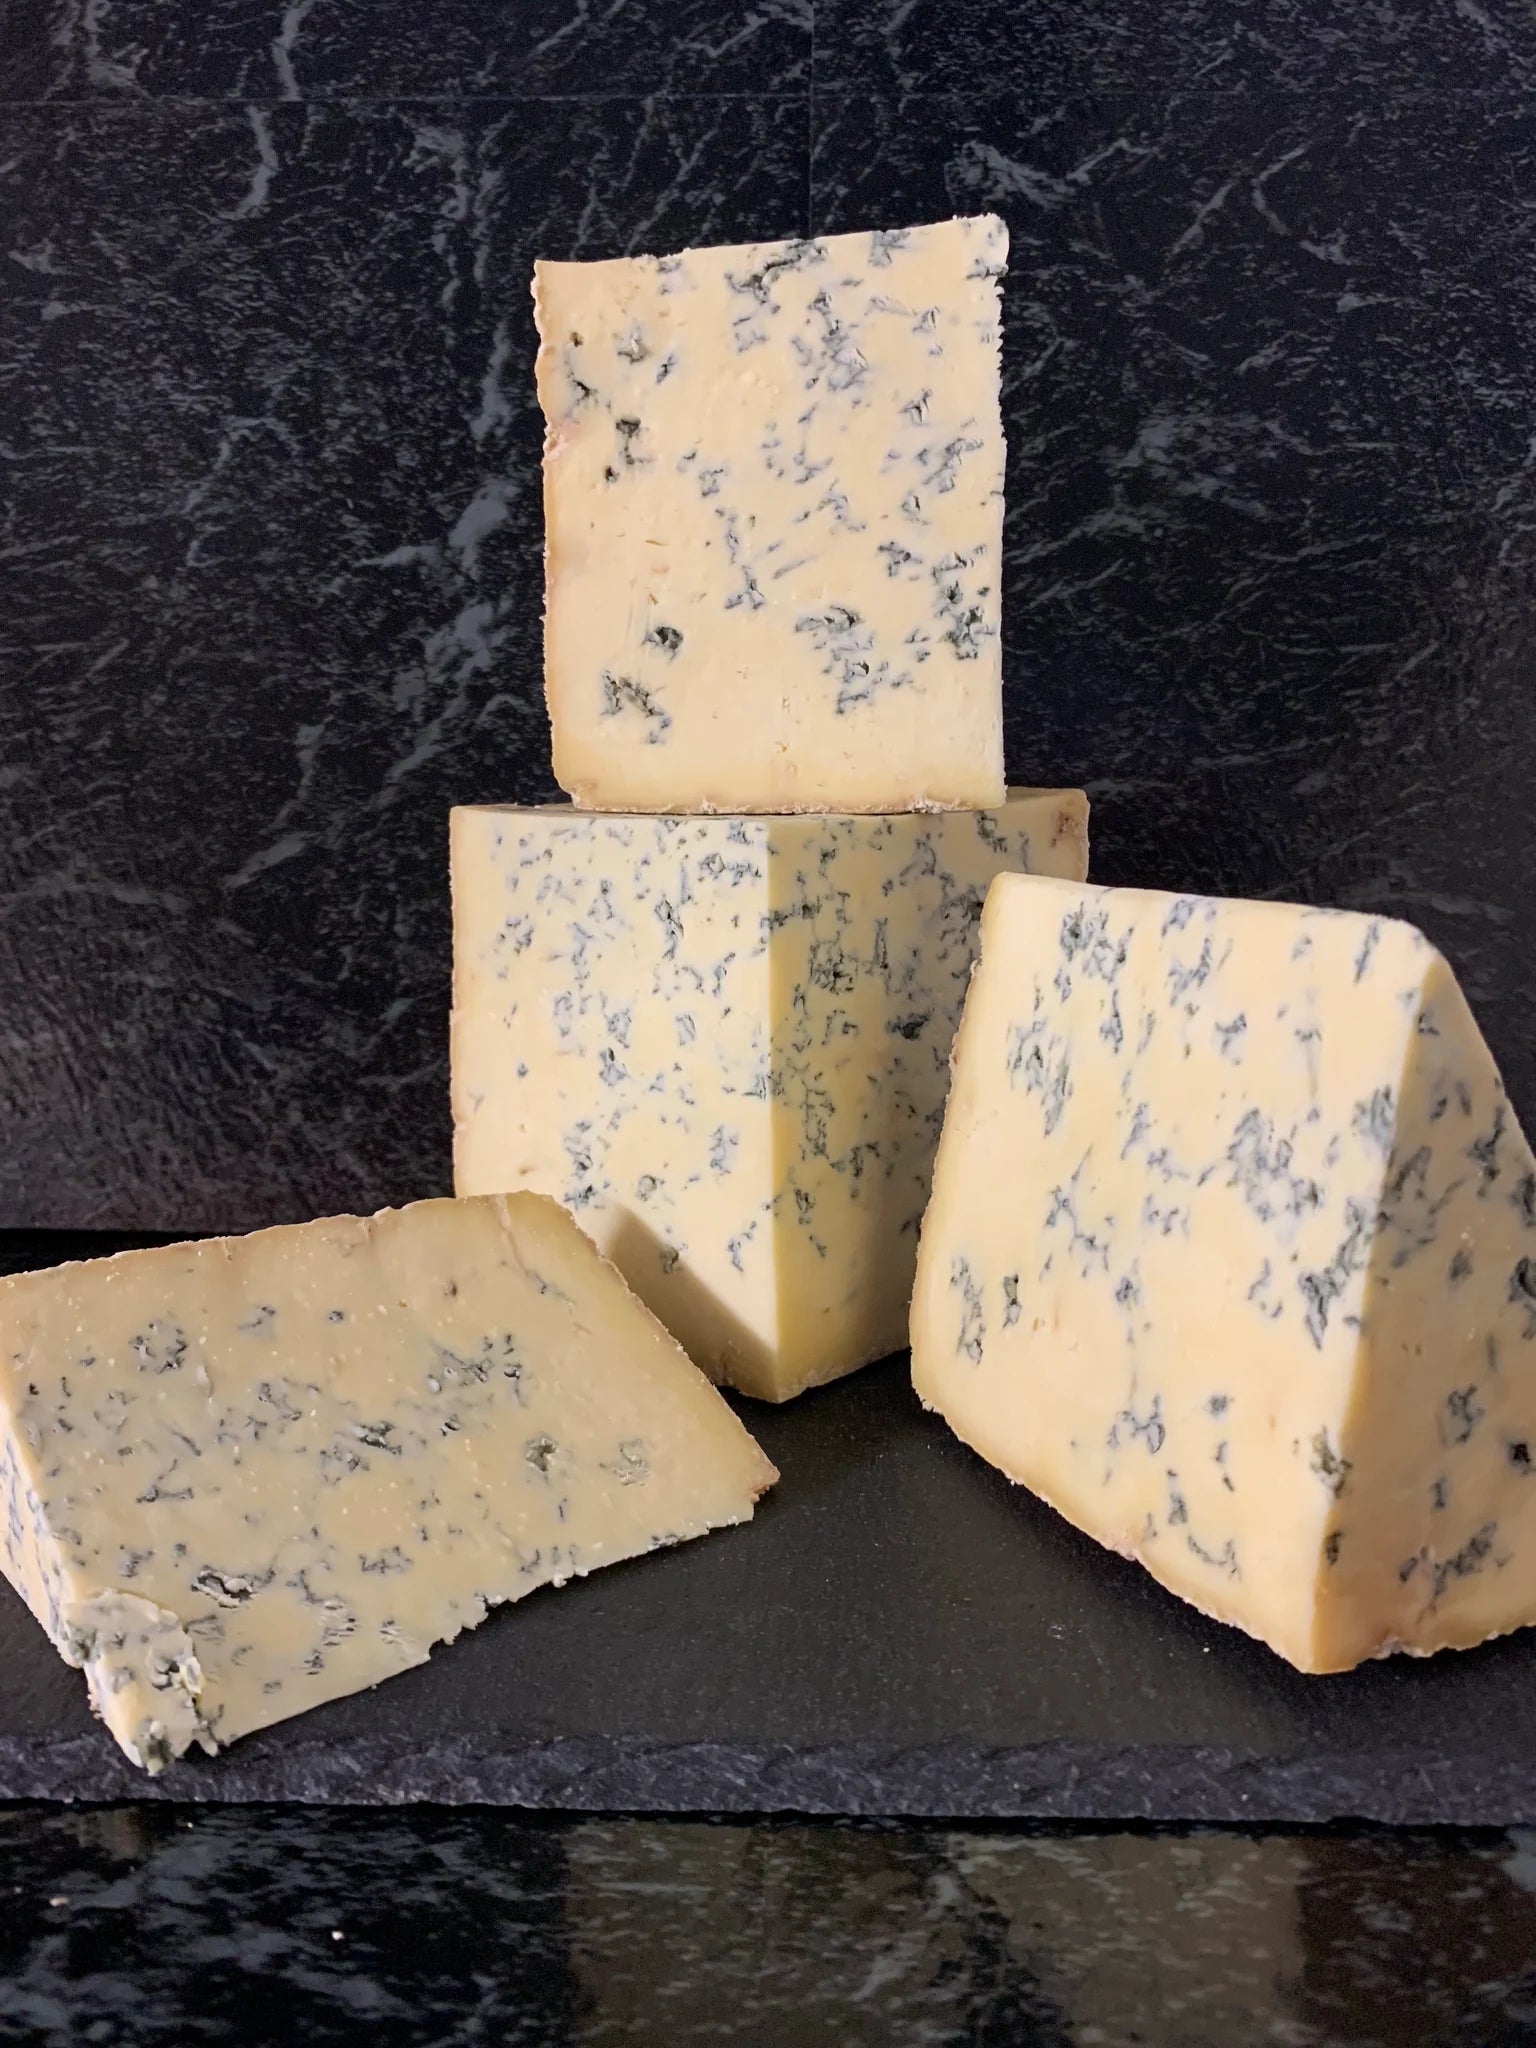 1780 Vintage Stilton Cheese, Tuxford & Tebbutt (454g)